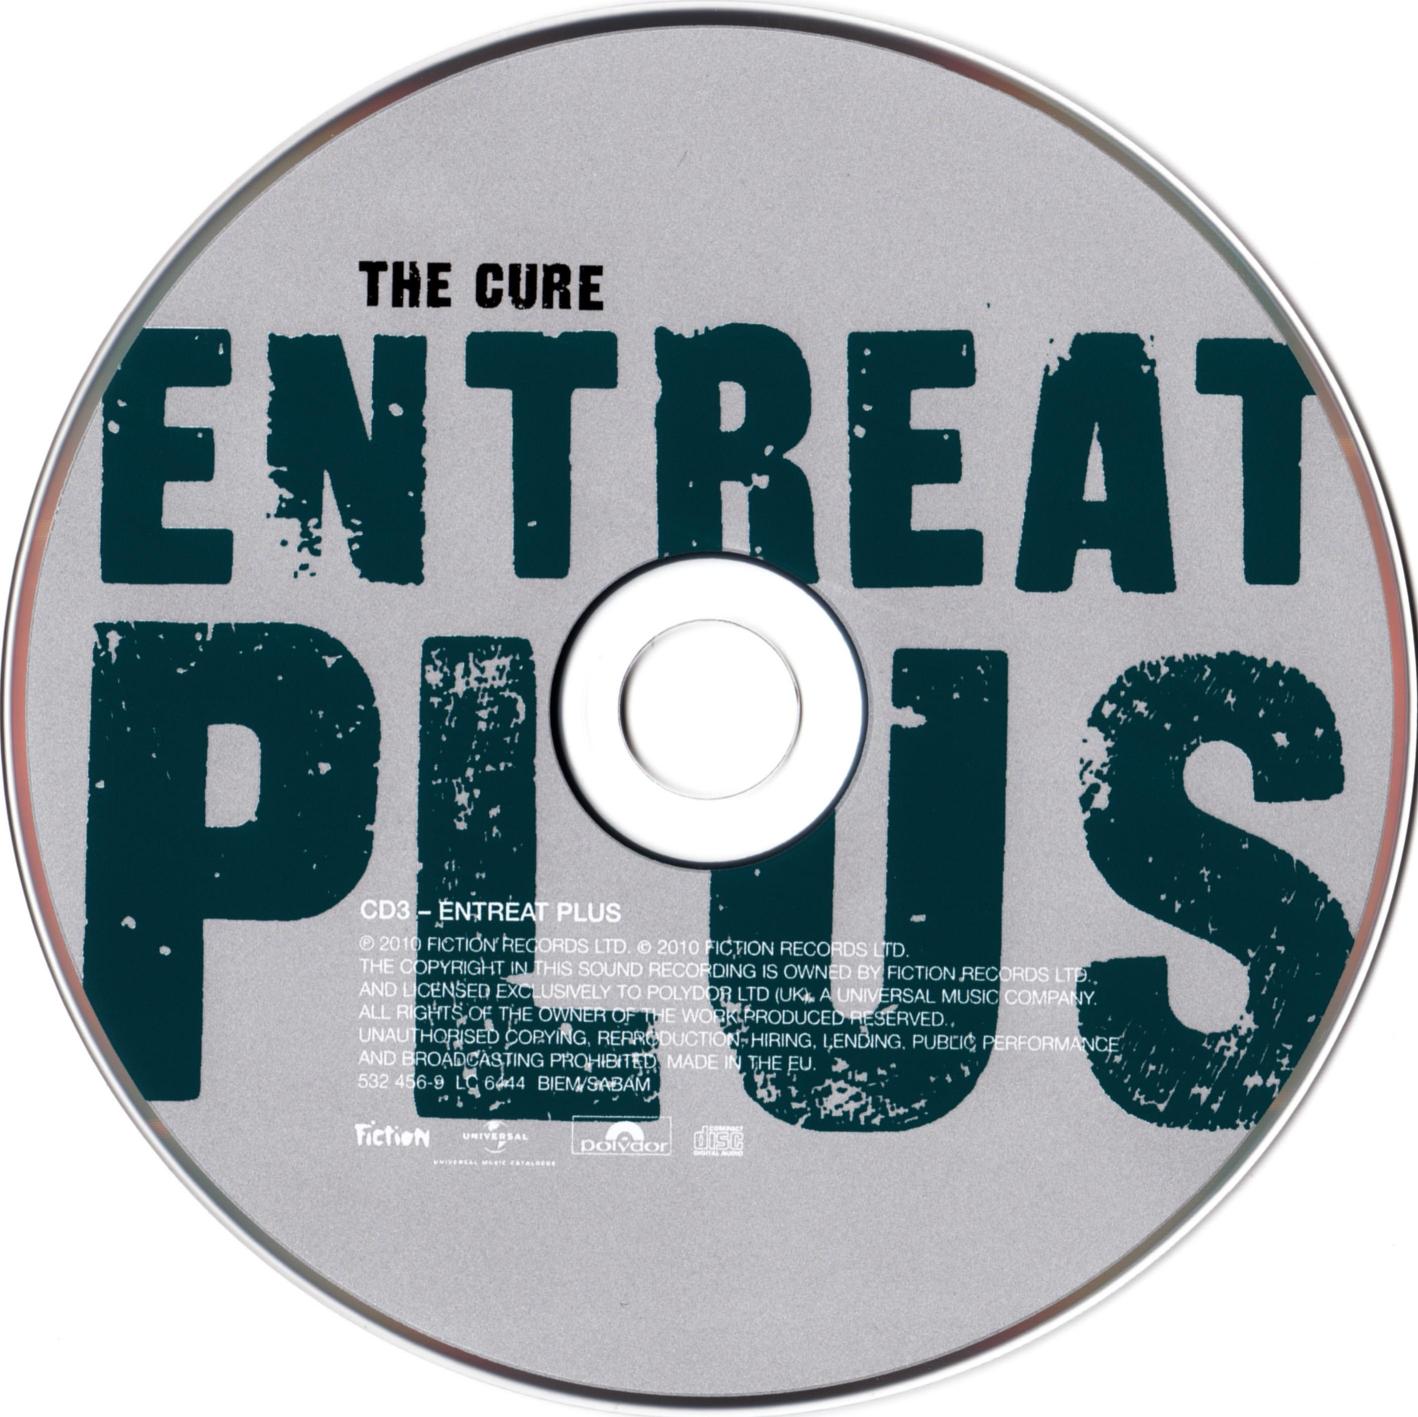 Cure перевод на русский. The Cure компакт диск. The Cure entreat. The Cure Deluxe Edition. The Cure entreat Plus.